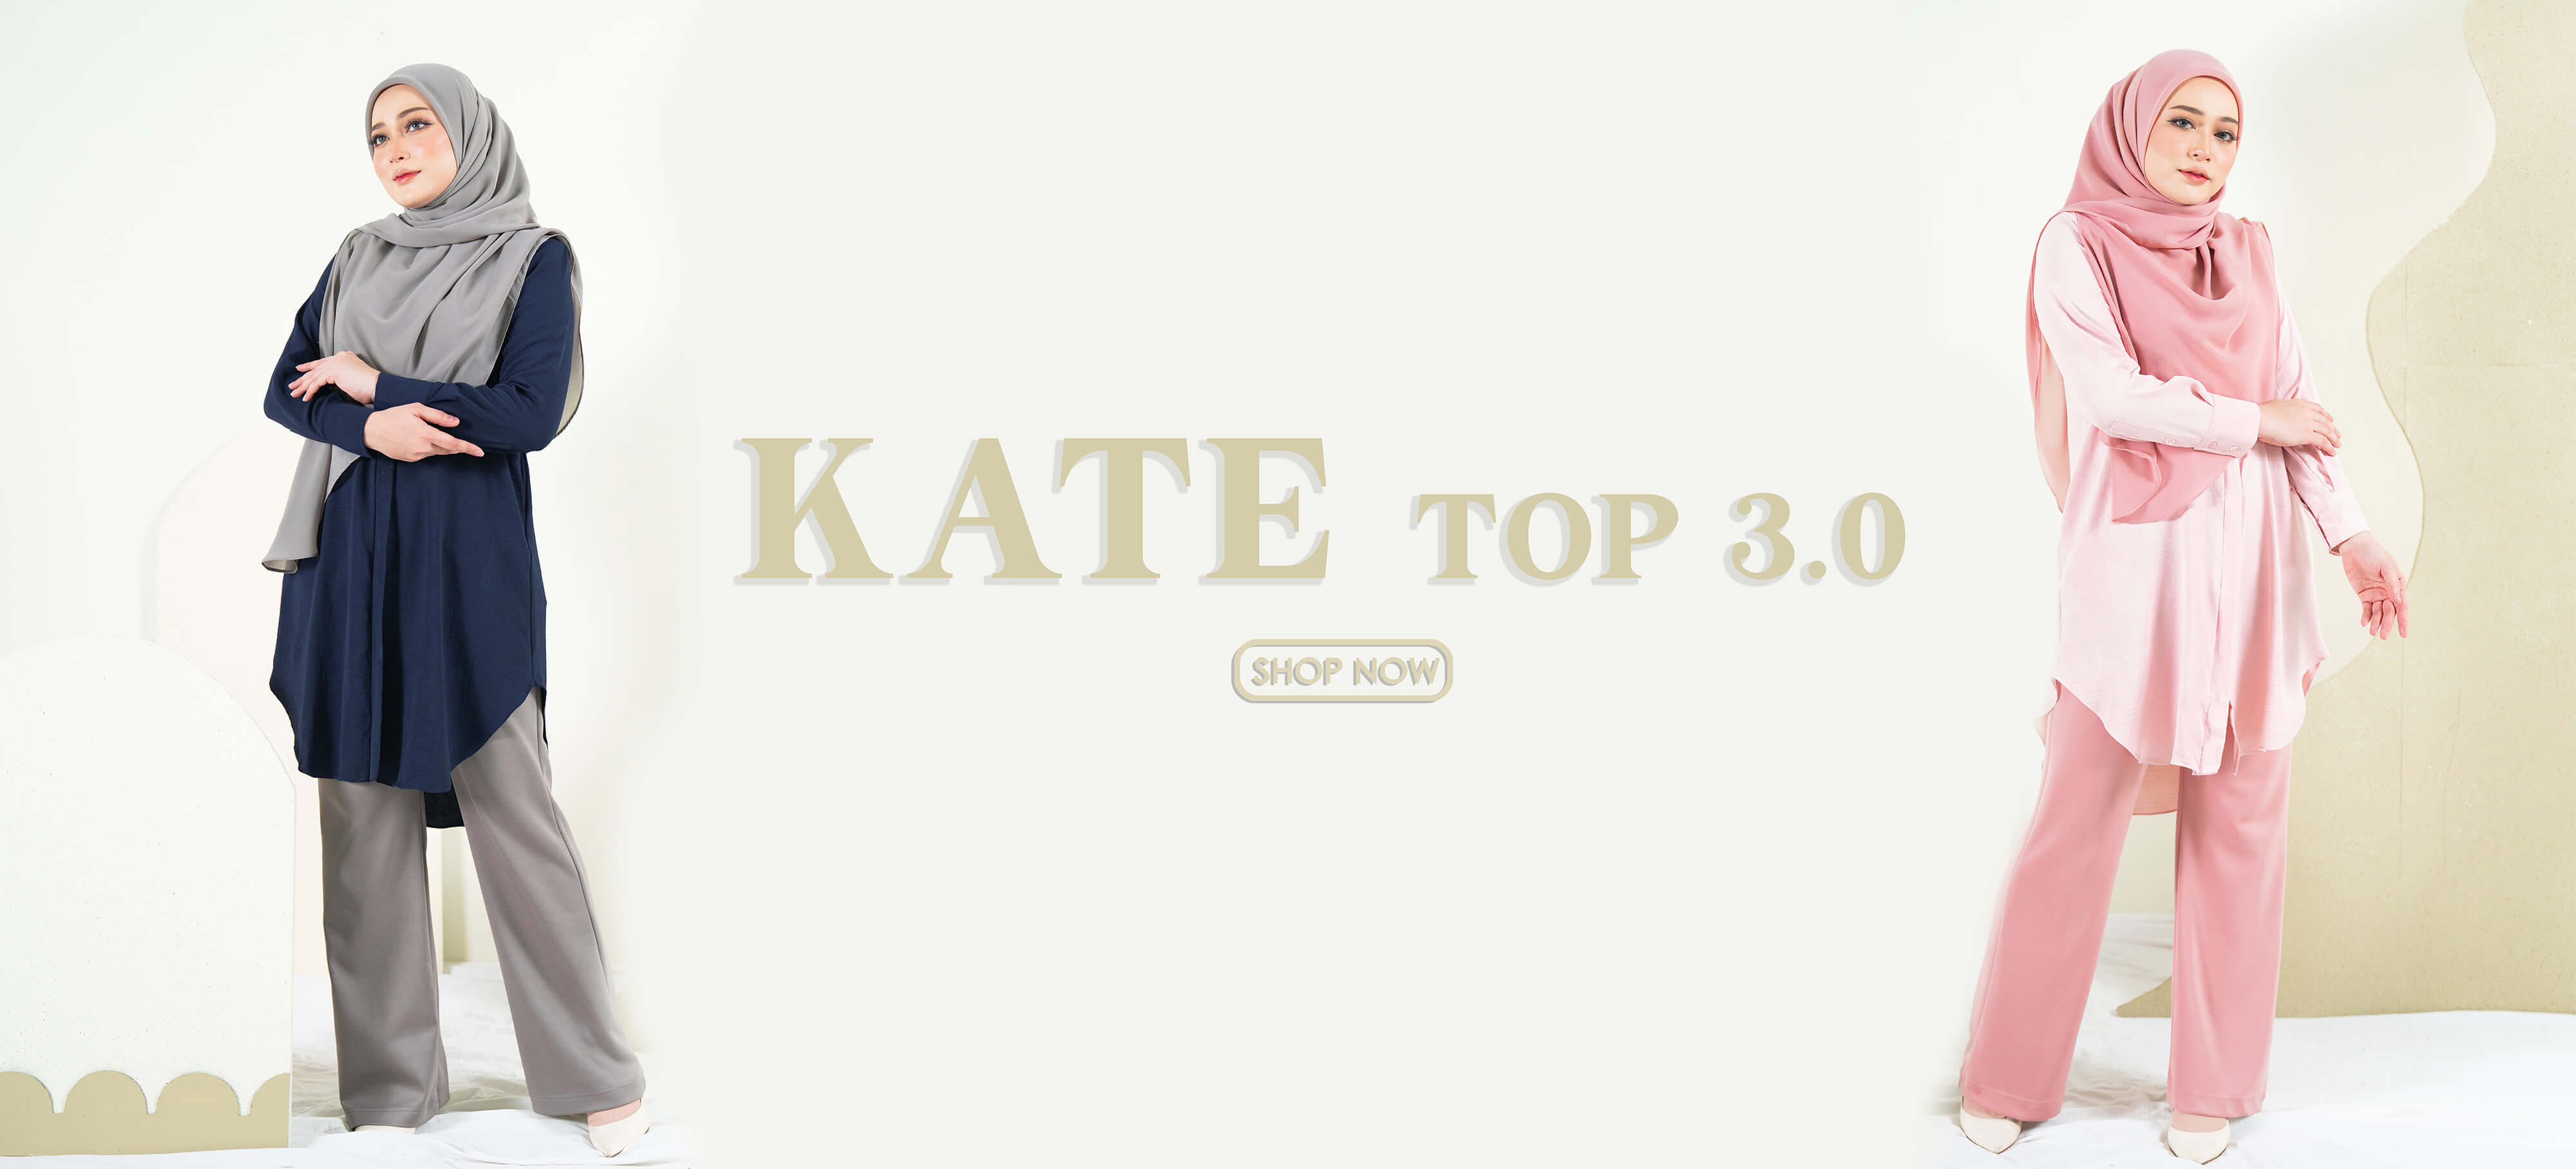 Kate Top 3.0